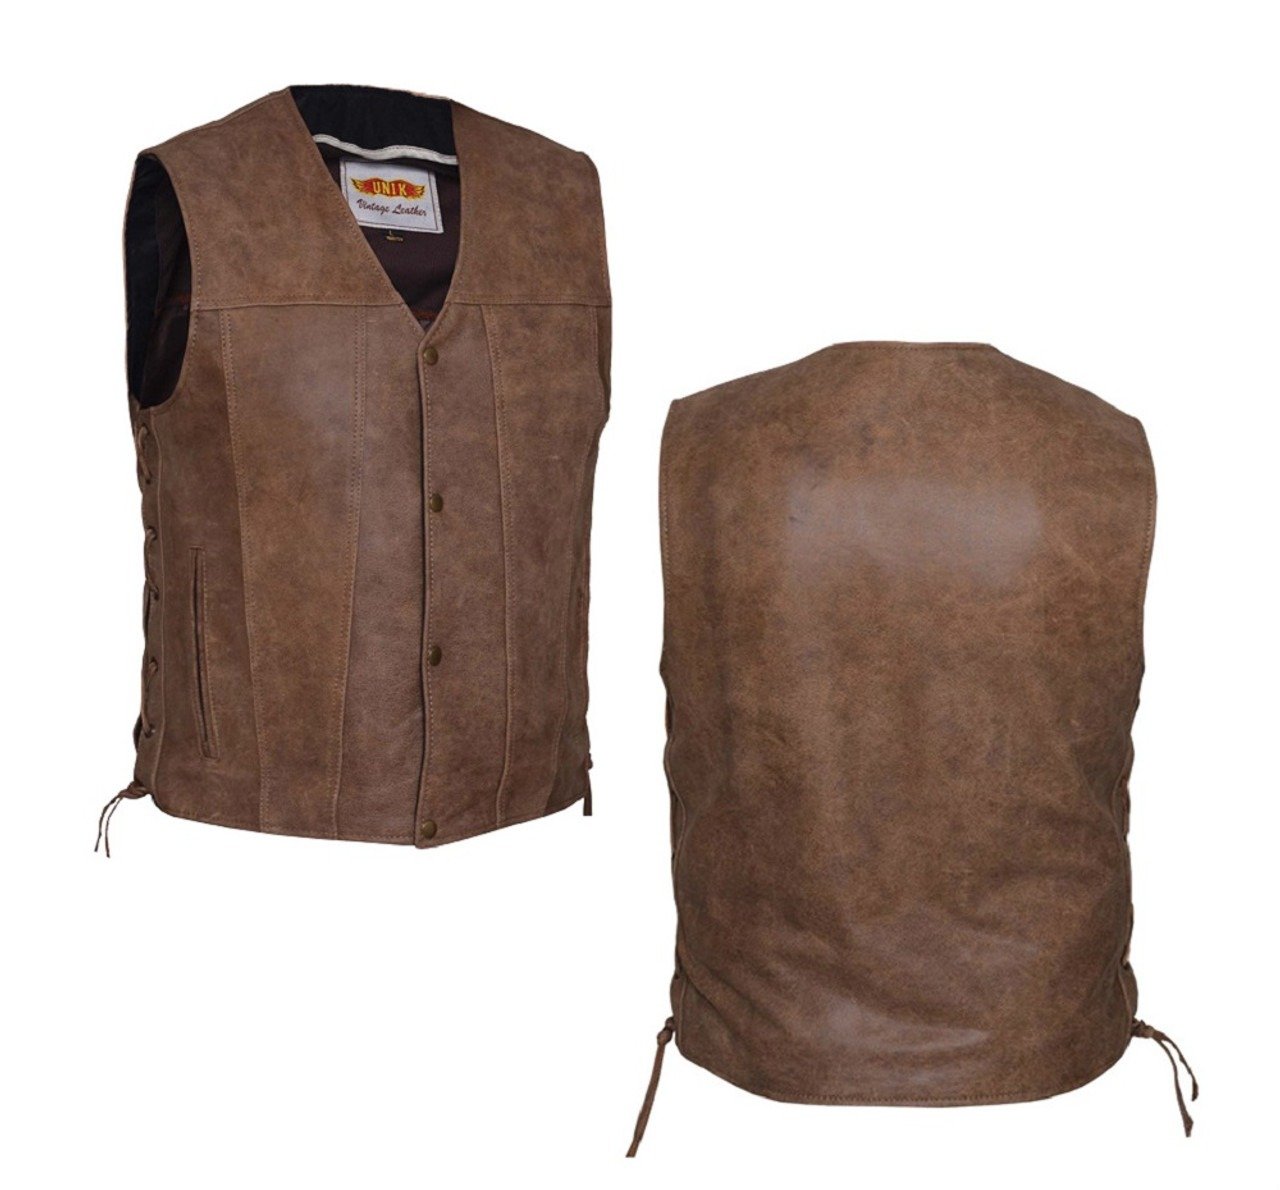 Rustic Elegance: Styling Tips for Your Brown Leather Biker Vest